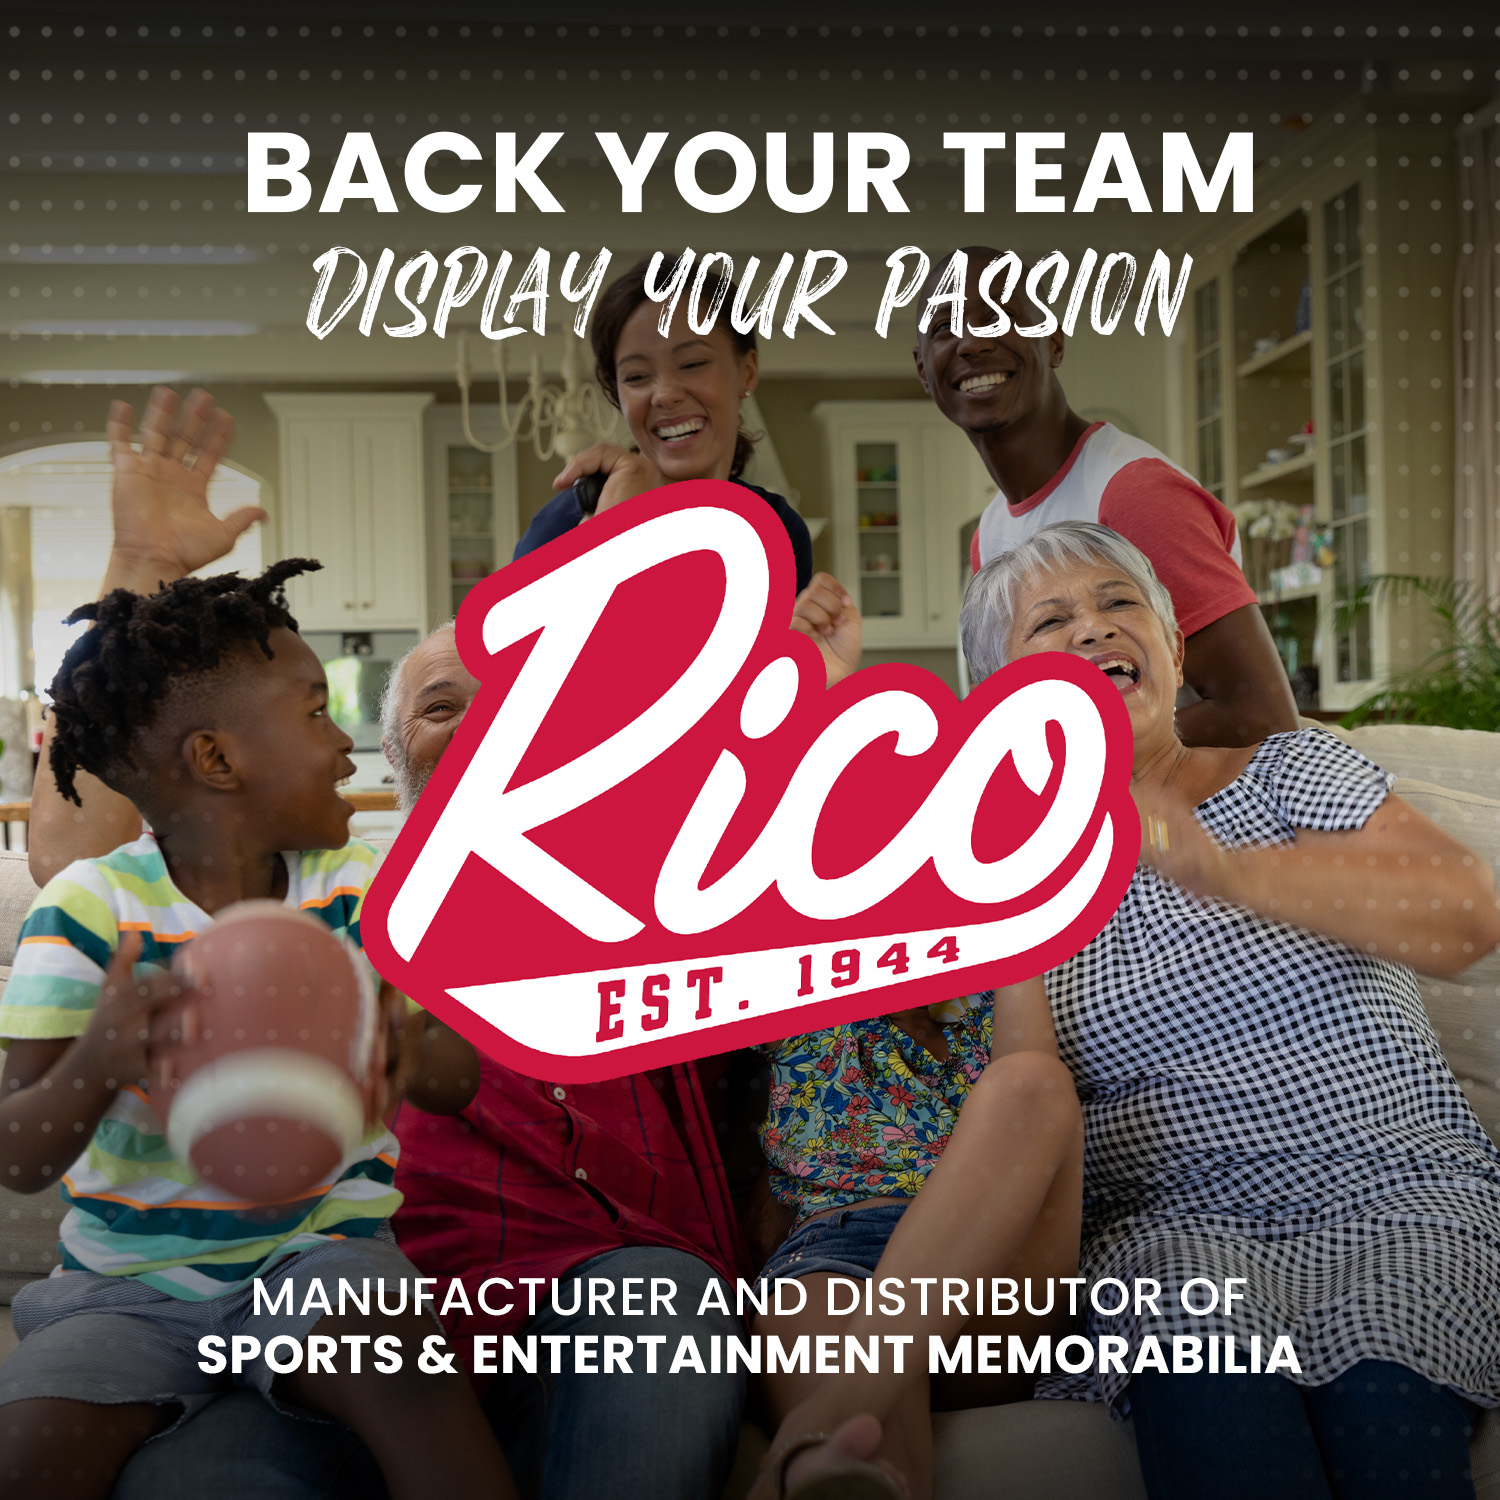 Rico NASCAR Rico Industries Logo  Personalzied 3' x 5' Banner Flag